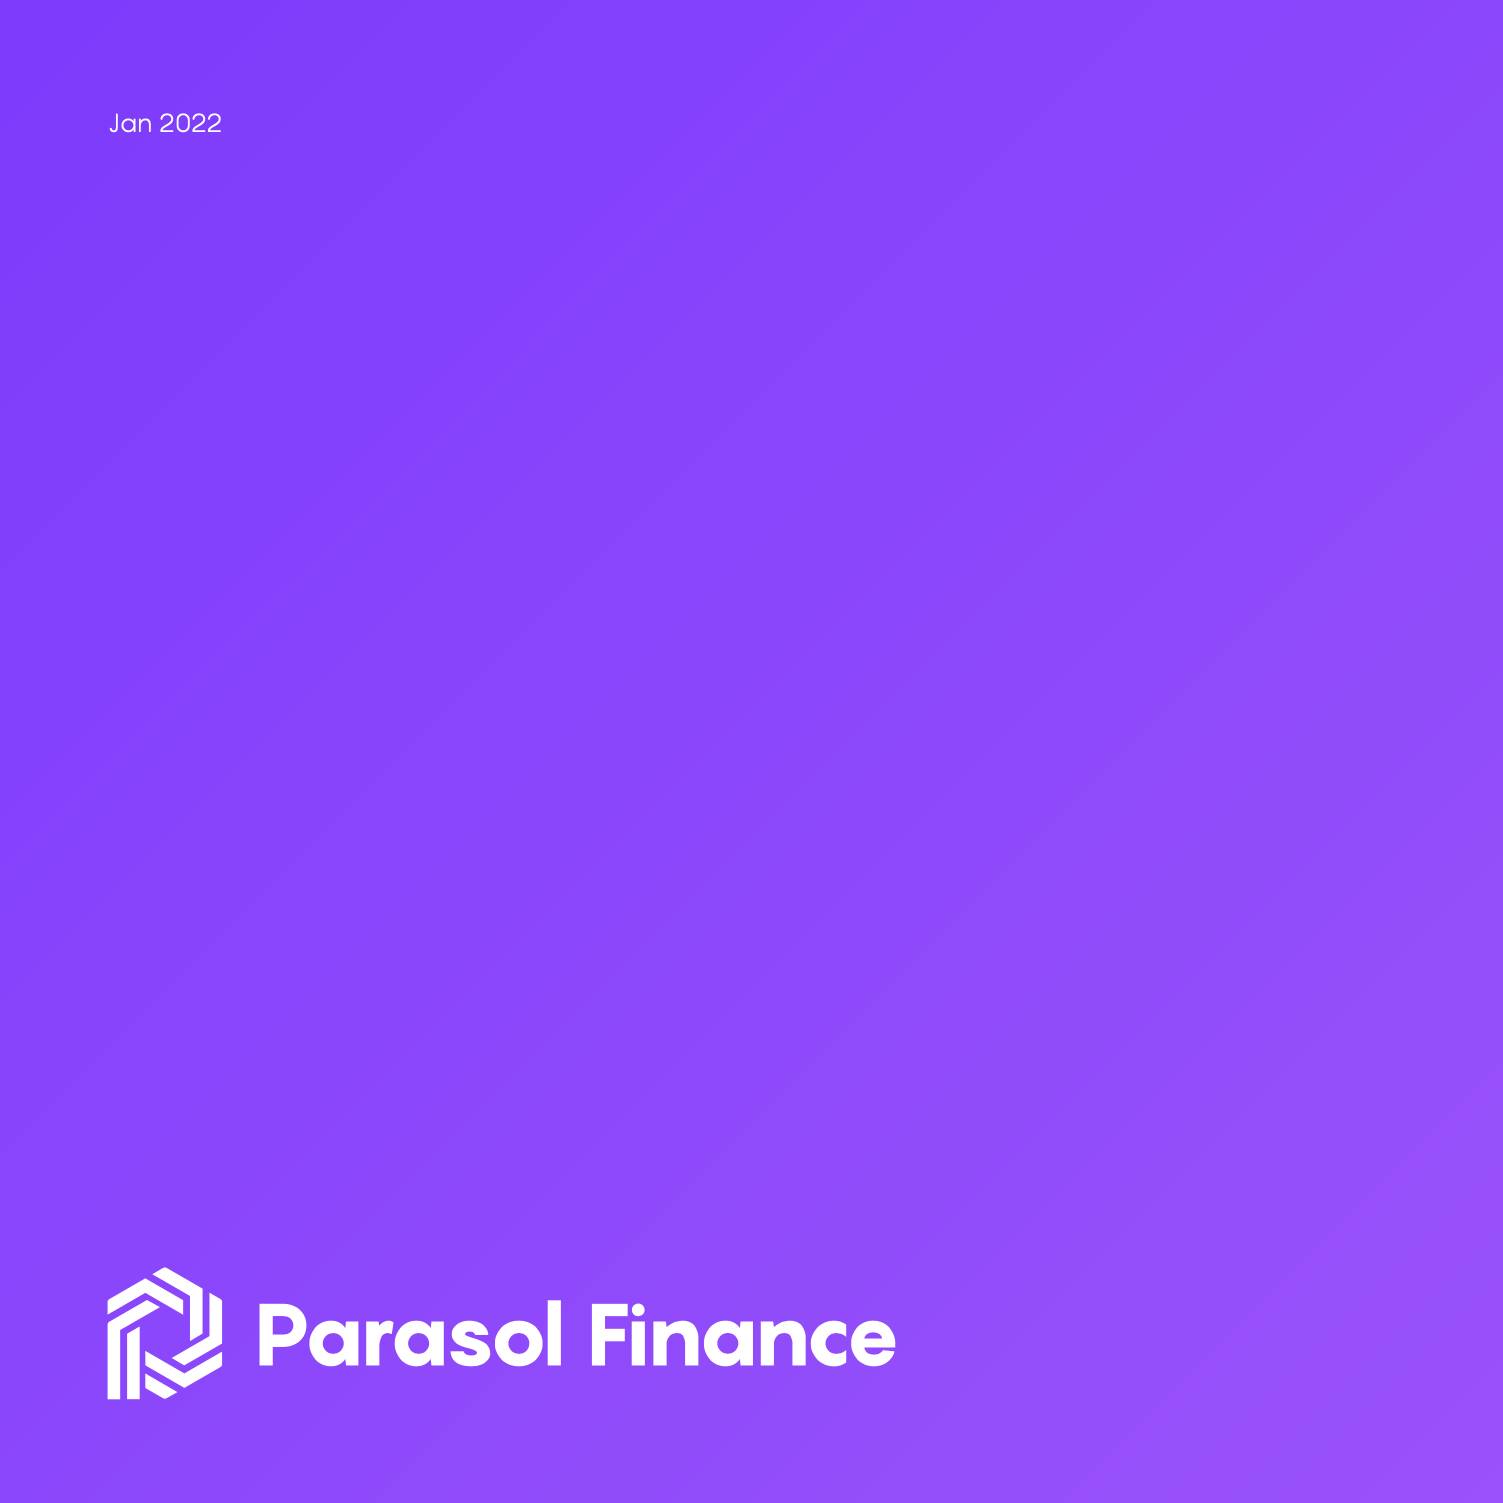 Parasol Finance Guidelines